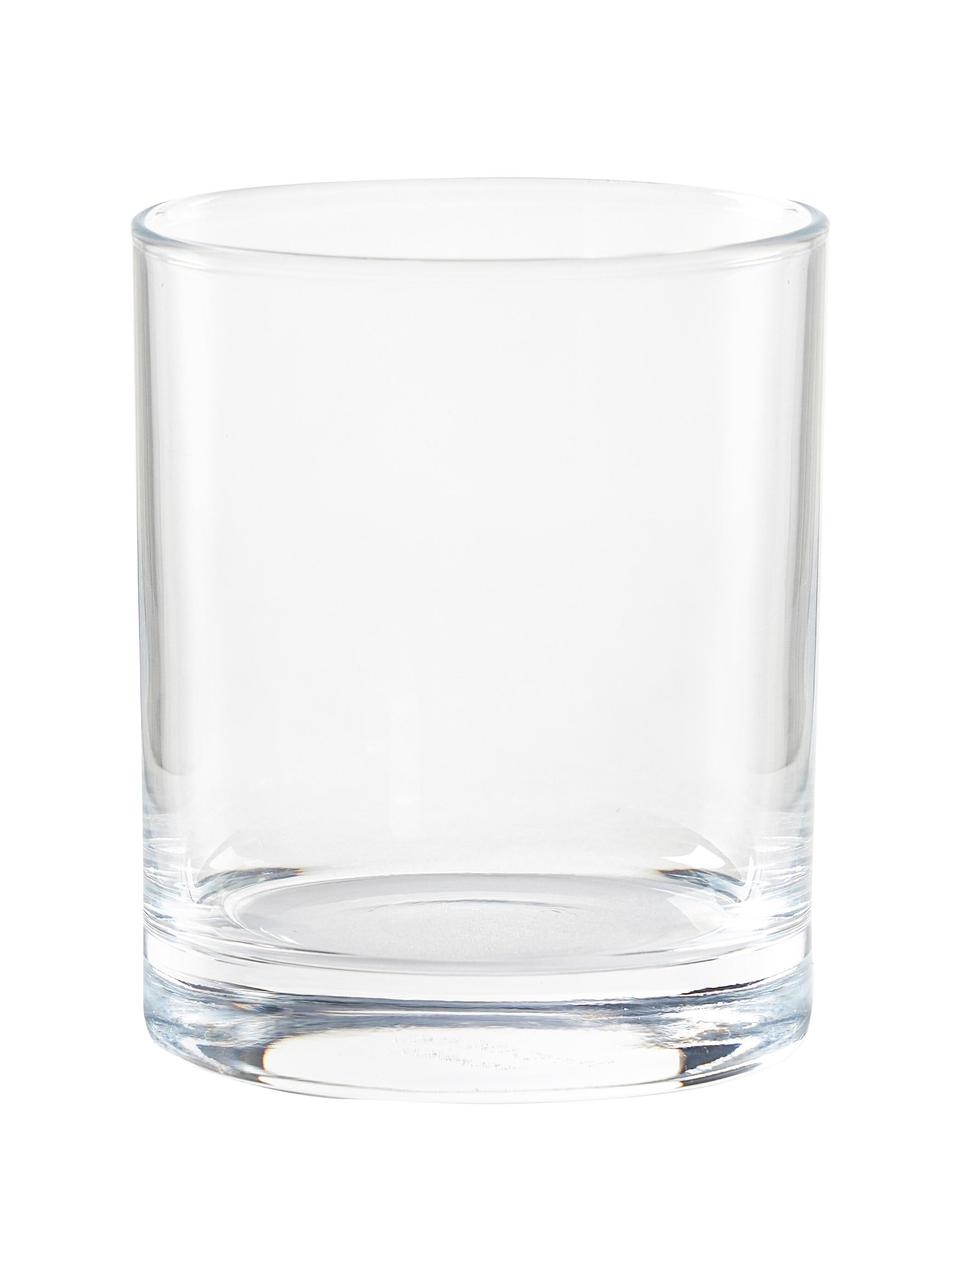 Bicchiere da bar Princesa 6 pz, Vetro, Trasparente, Ø 7 x Alt. 8 cm, 230 ml